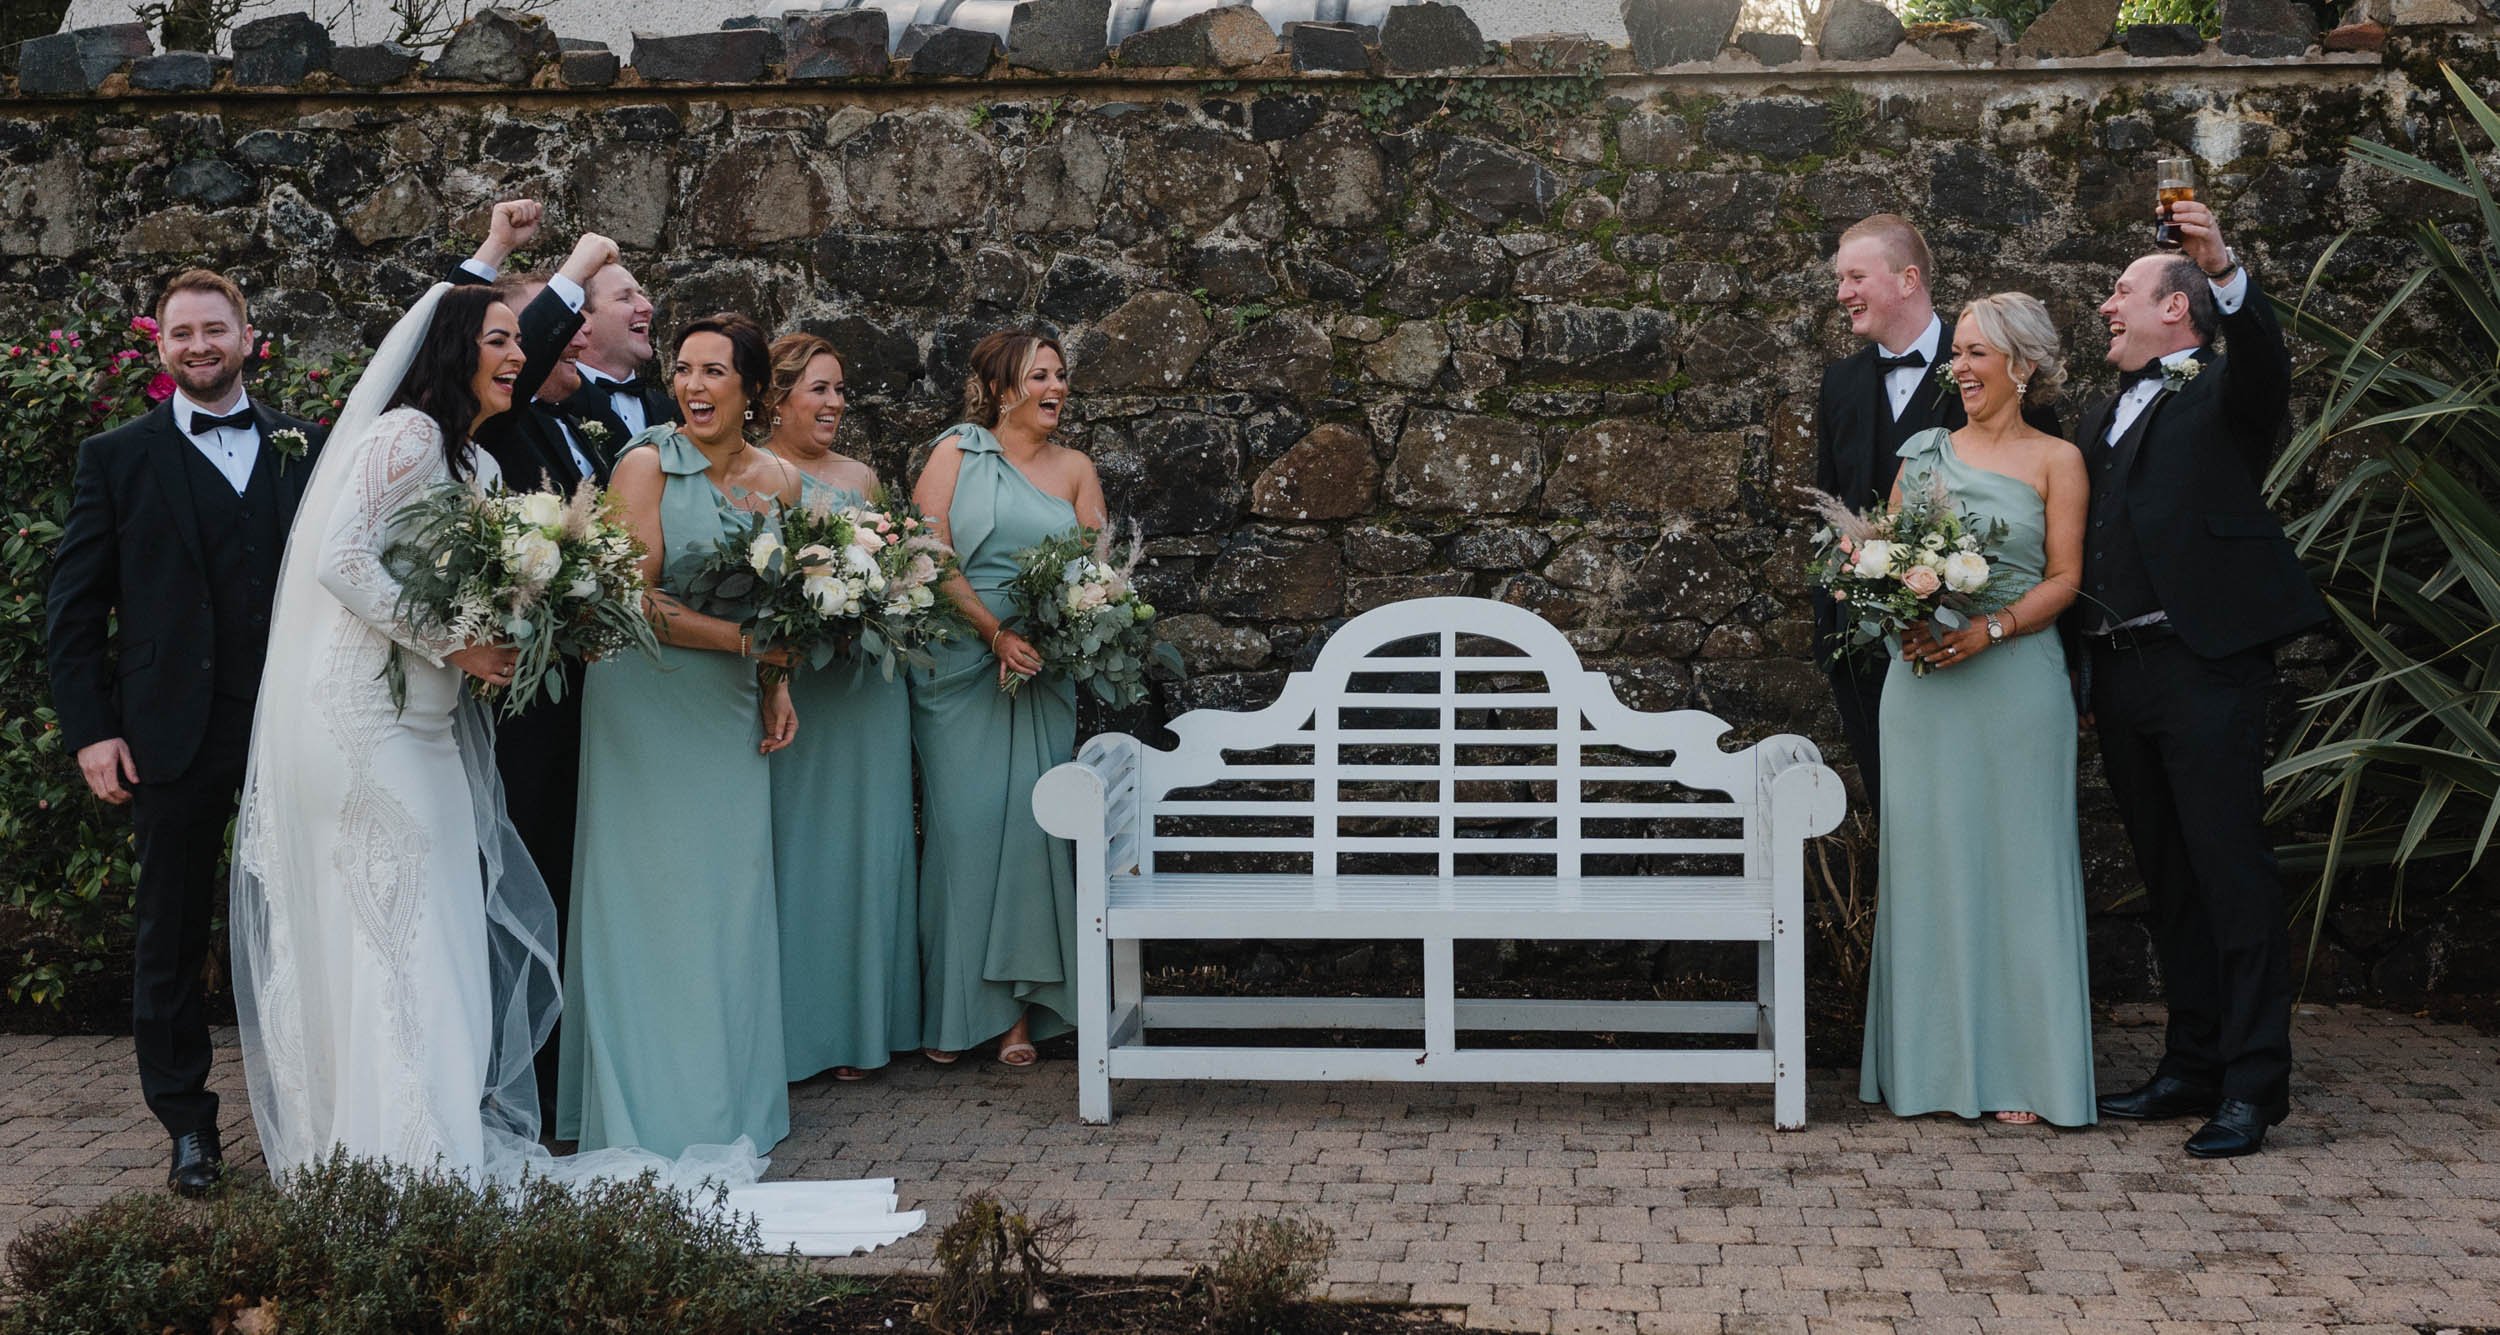 Michelle & Andrew - Tullyglass Ballymena - Paula Donnelly Wedding Photographer Northern Ireland27.jpg